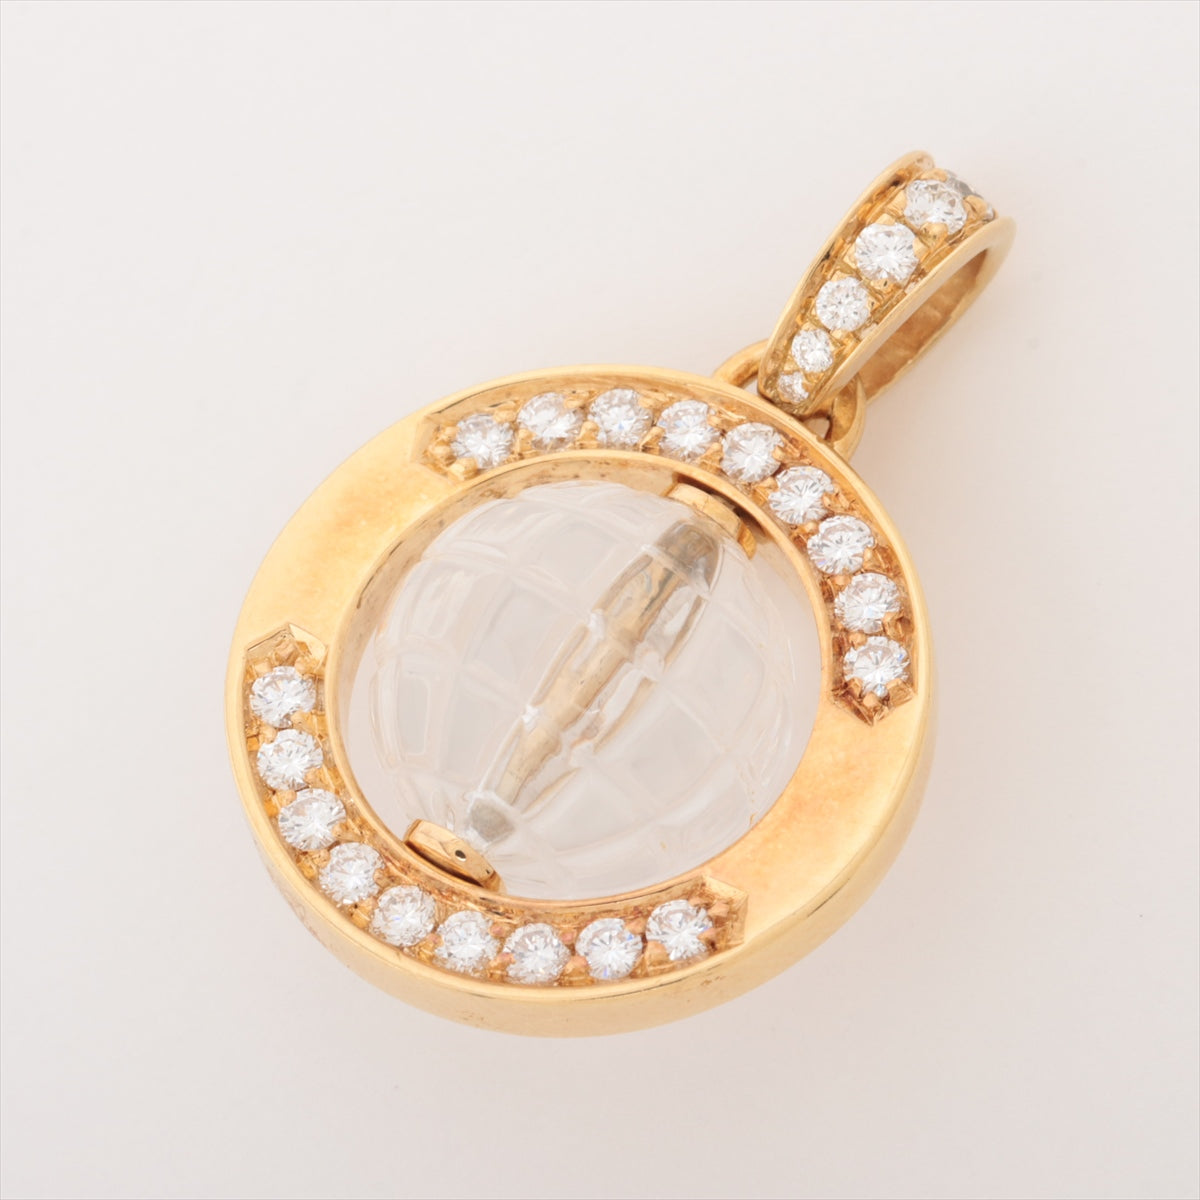 Boucheron Crystal Diamond Necklace top K18(YG) 8.3g